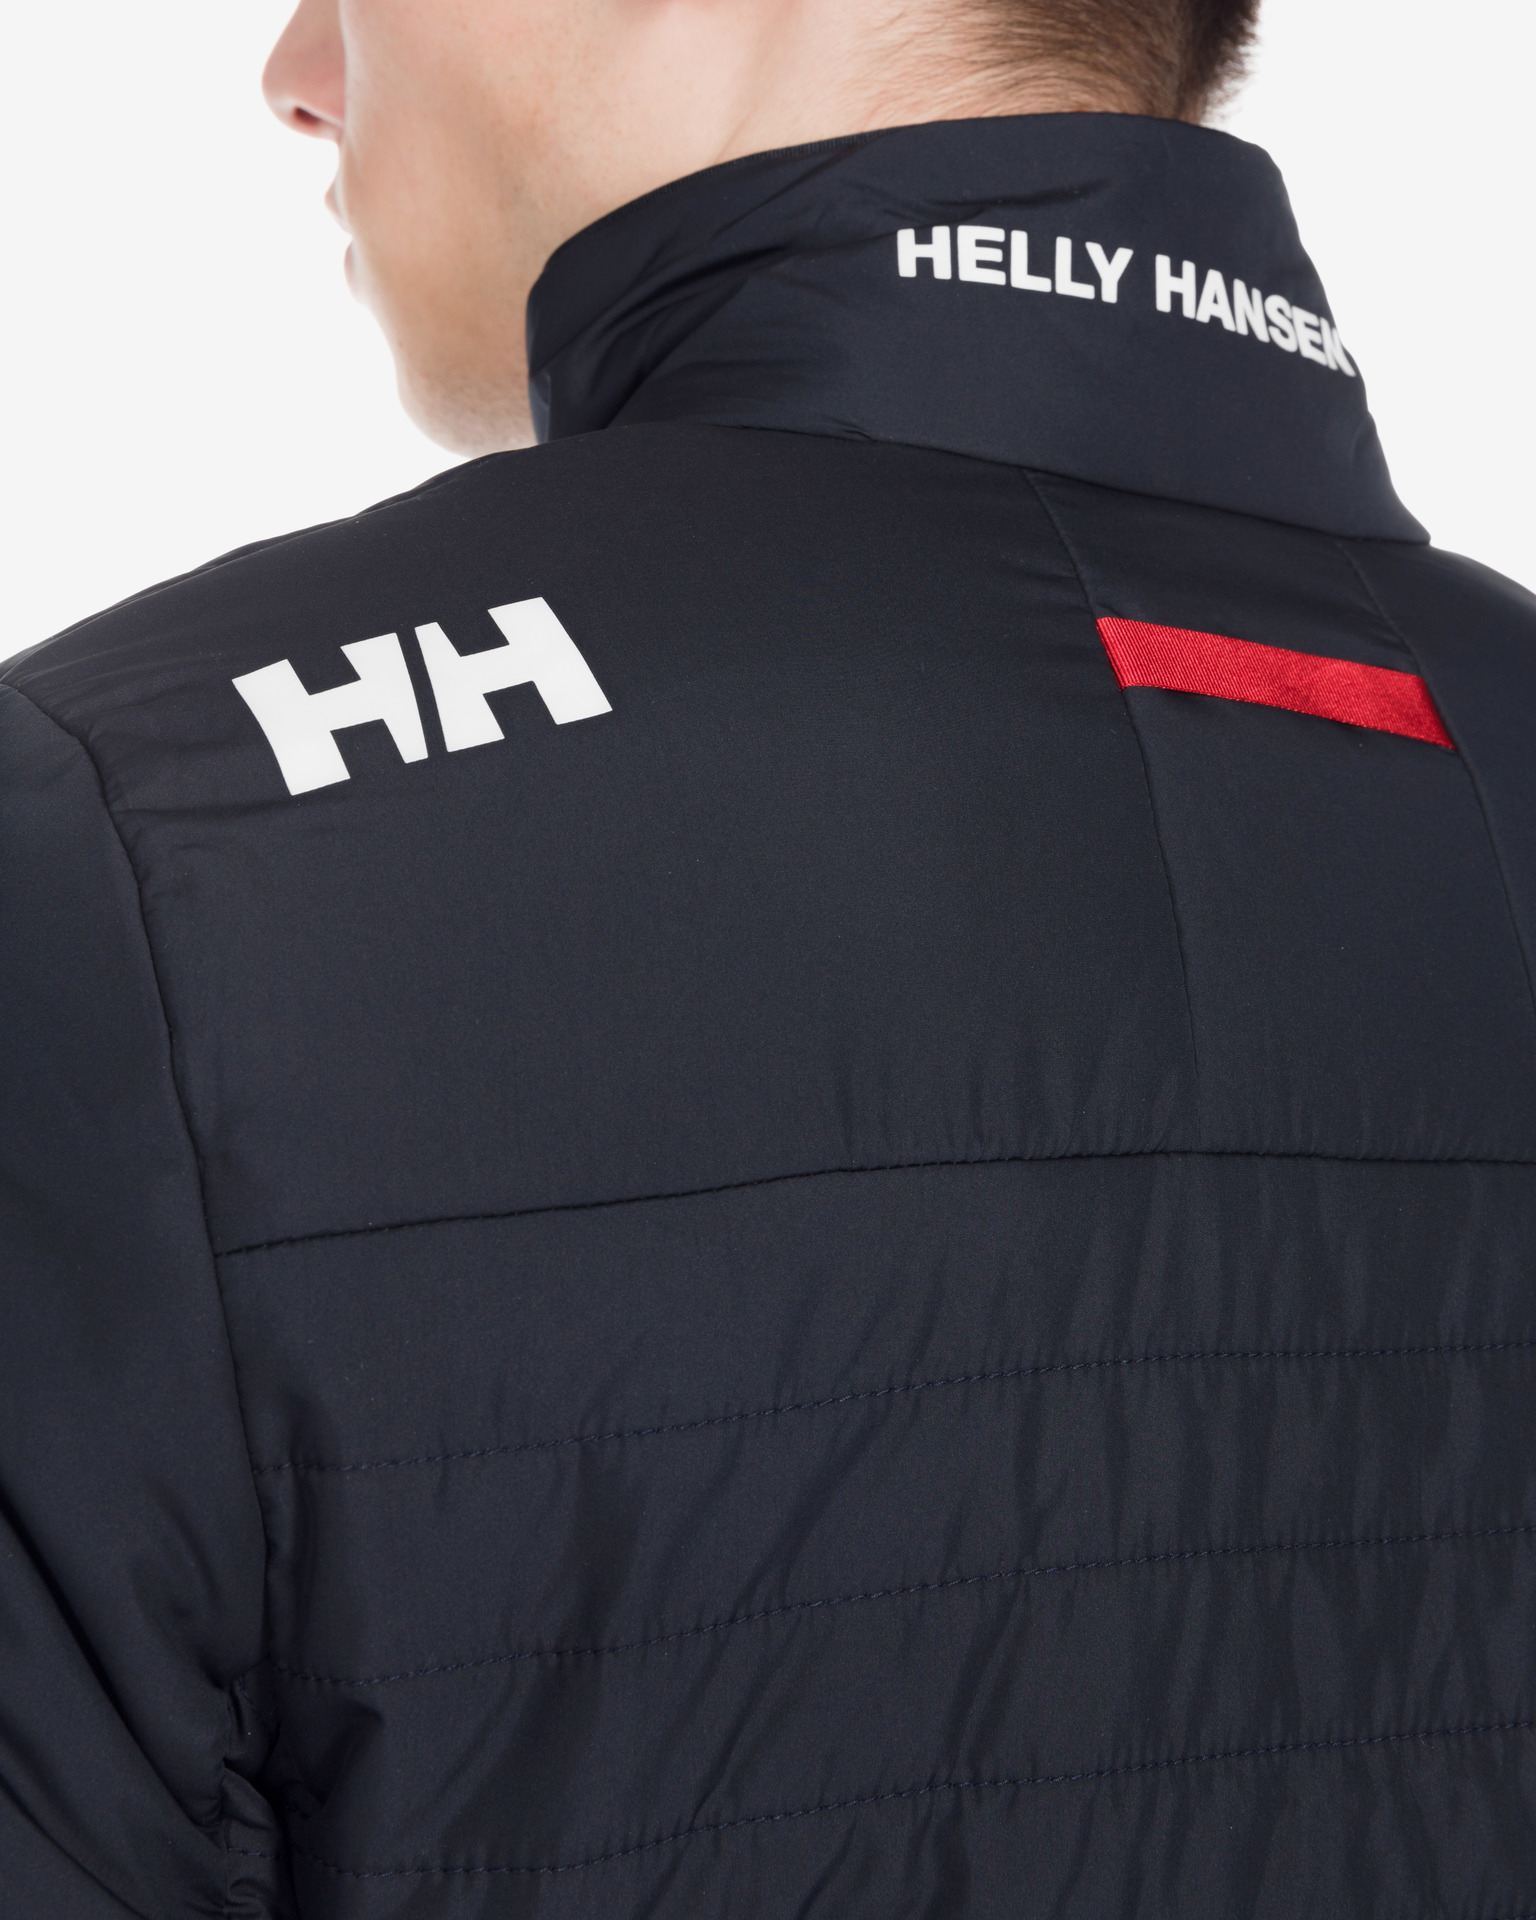 Helly Hansen - Jacket Bibloo.com